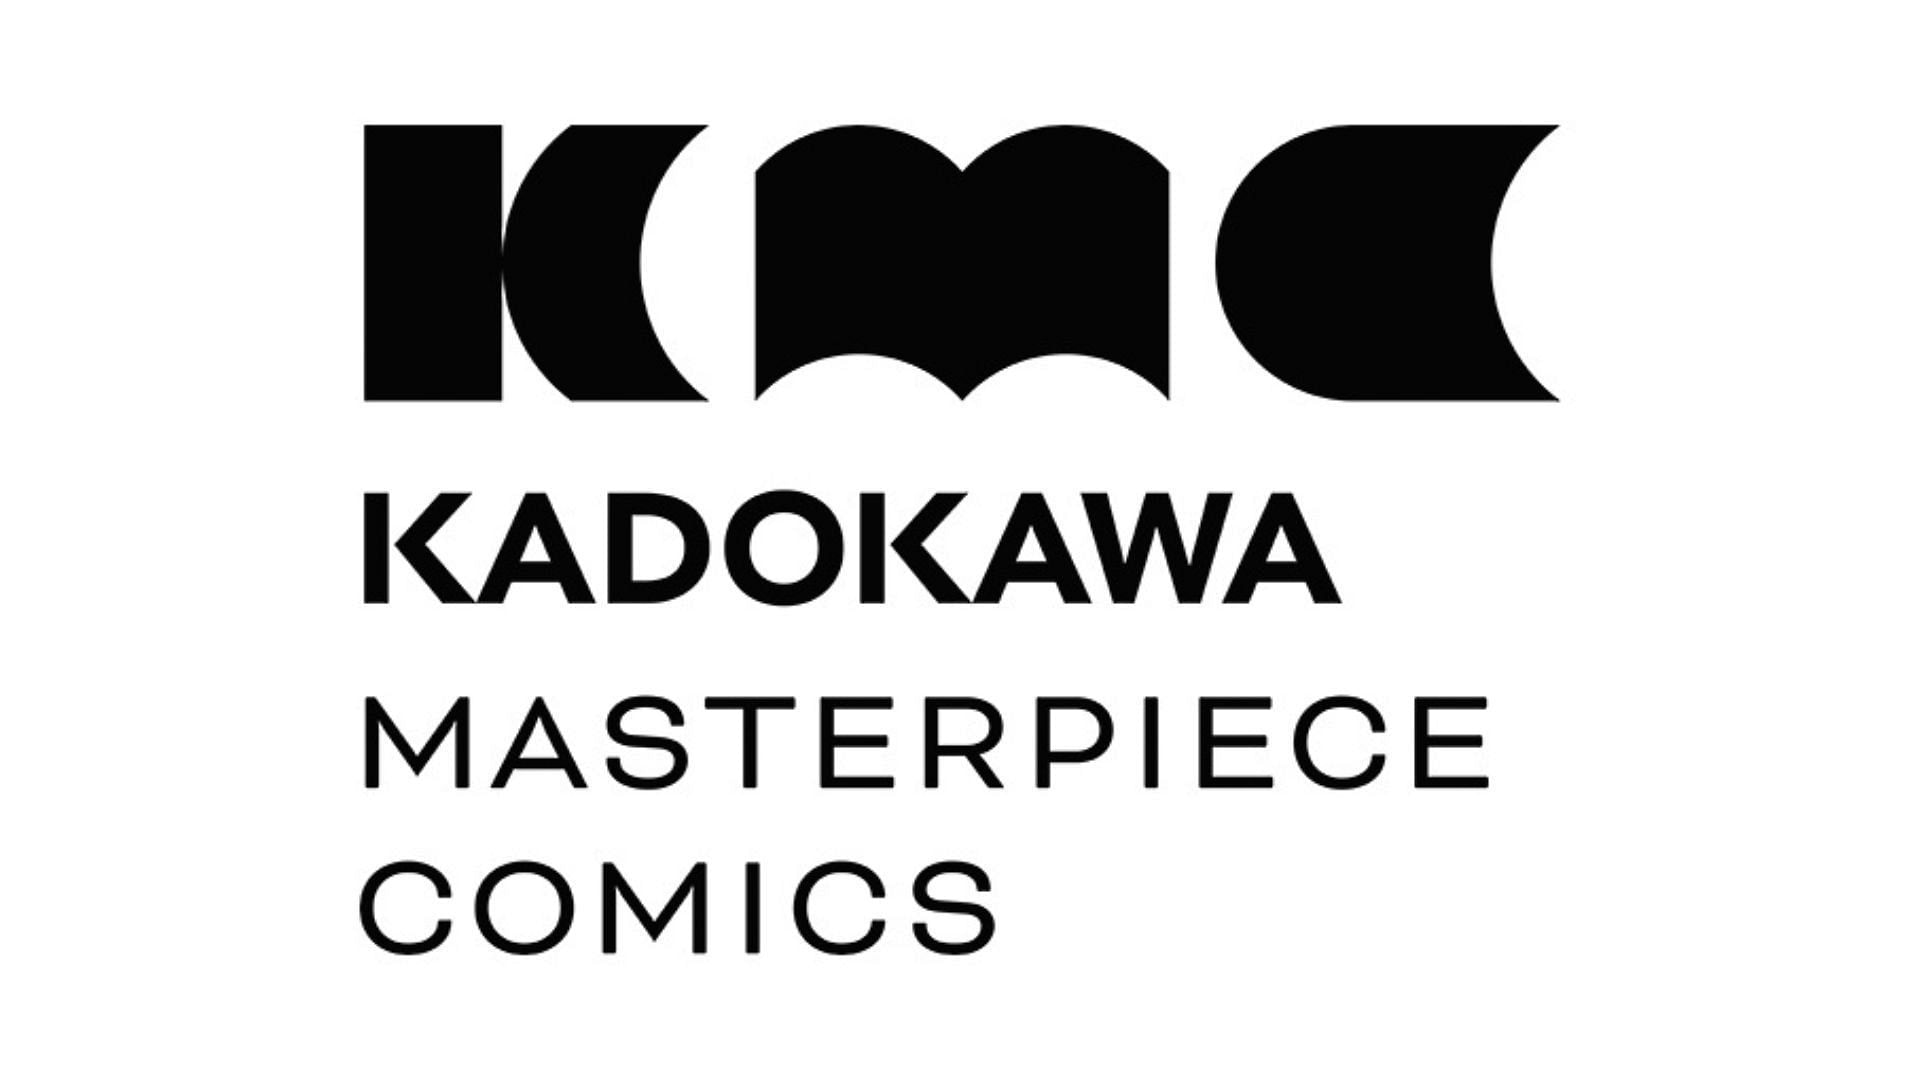 KADOKAWA Masterpiece Comics (Image via KADOKAWA)